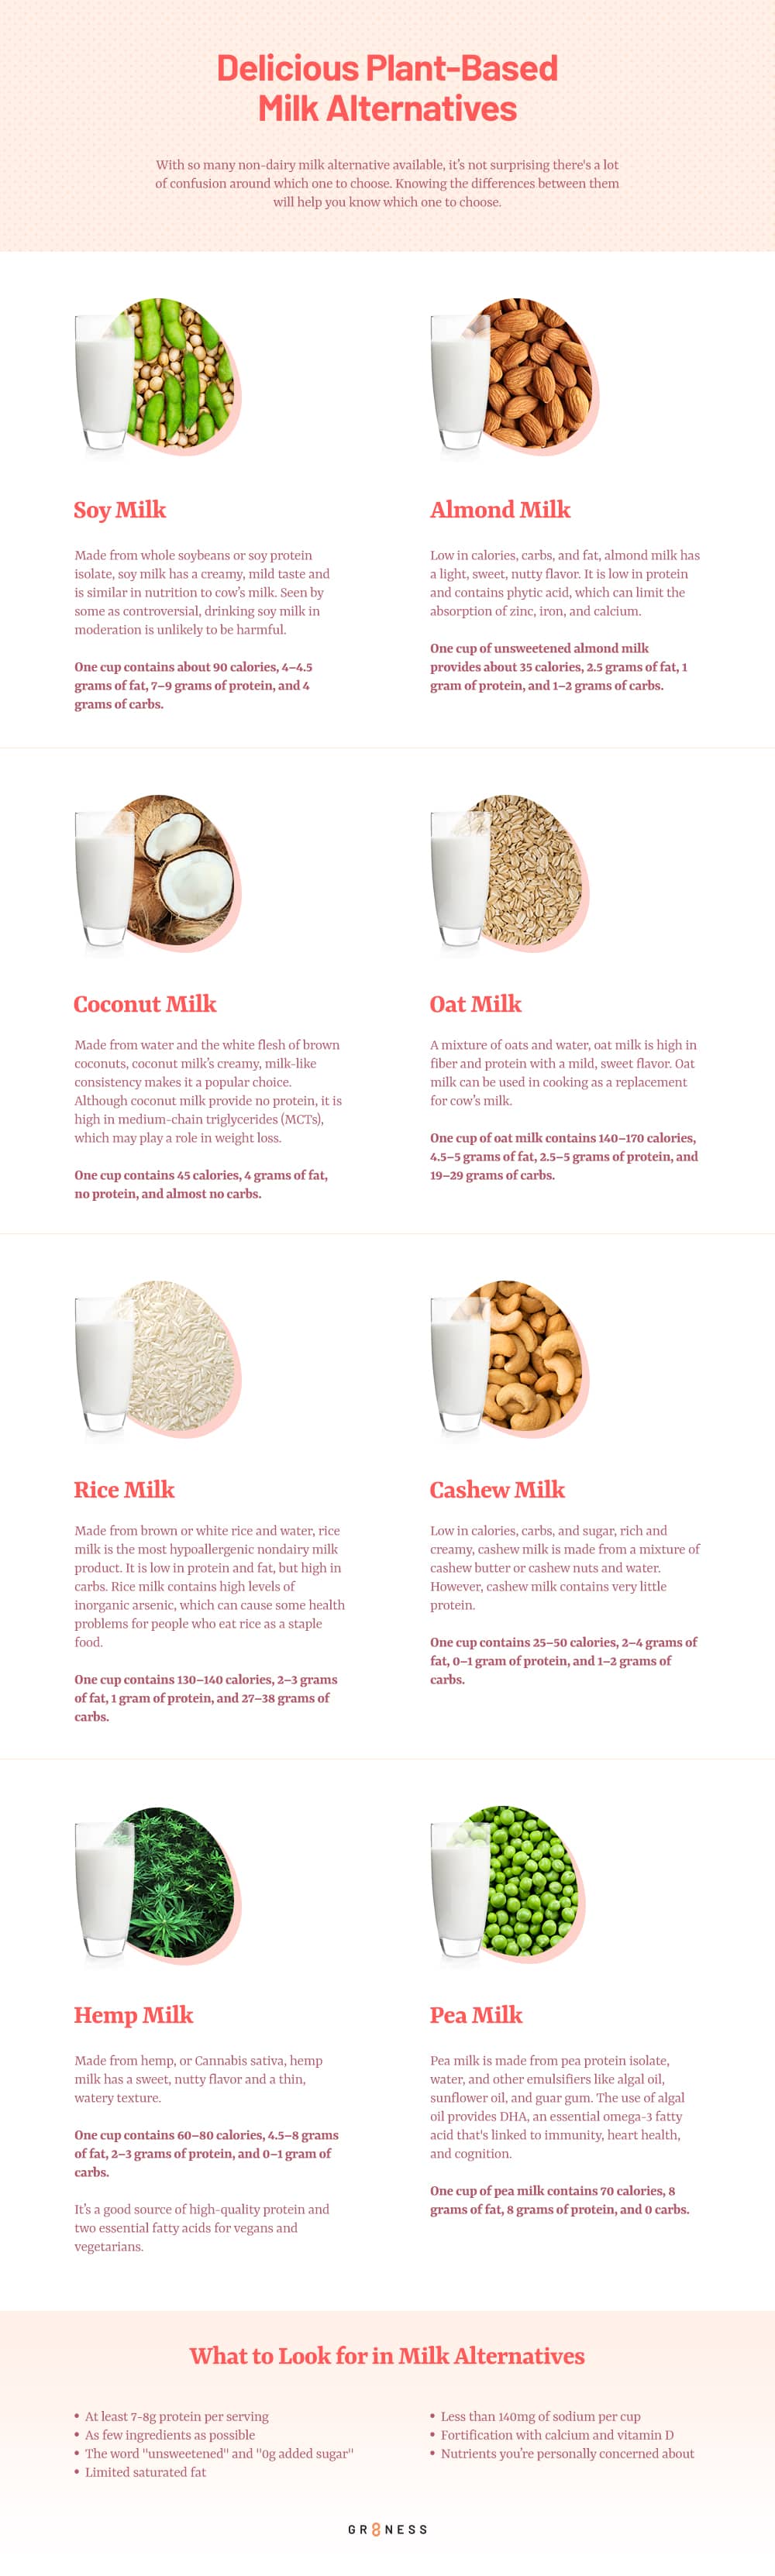 An infographic describing plant-based milk alternatives